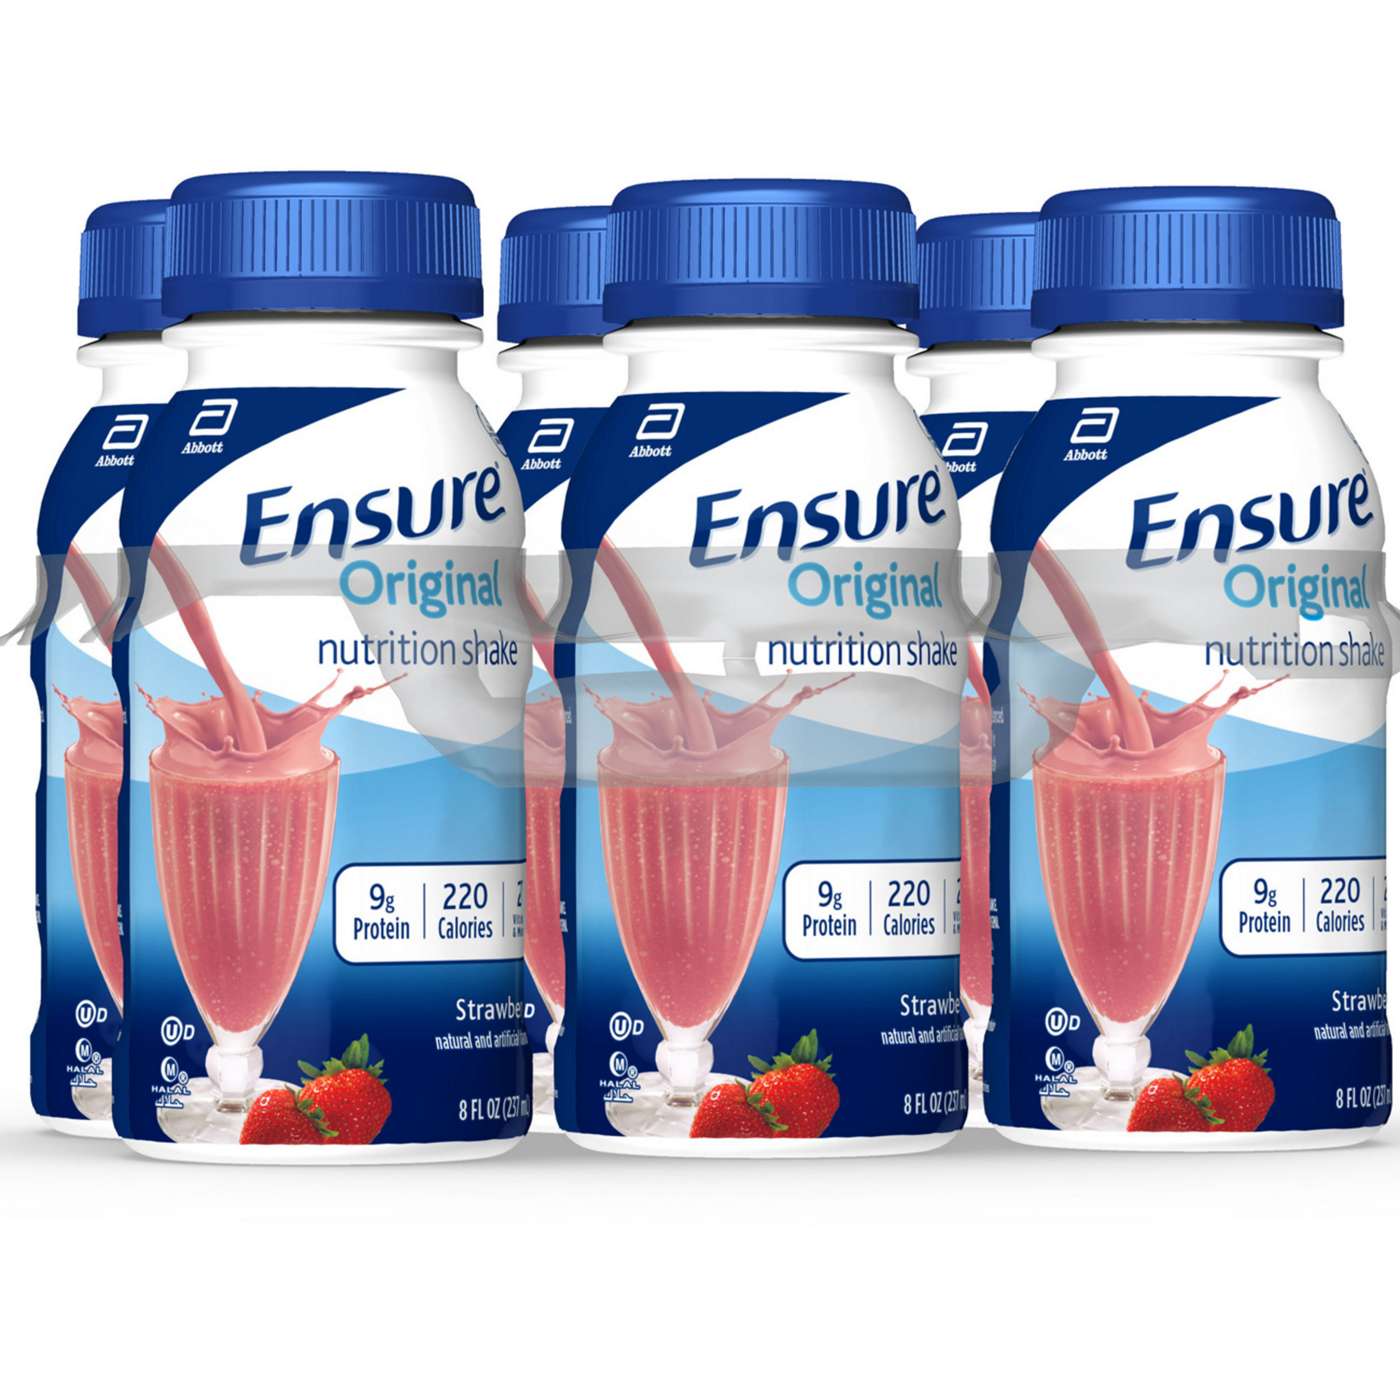 Ensure Original Nutrition Shake - Strawberry, 6 pk; image 6 of 10